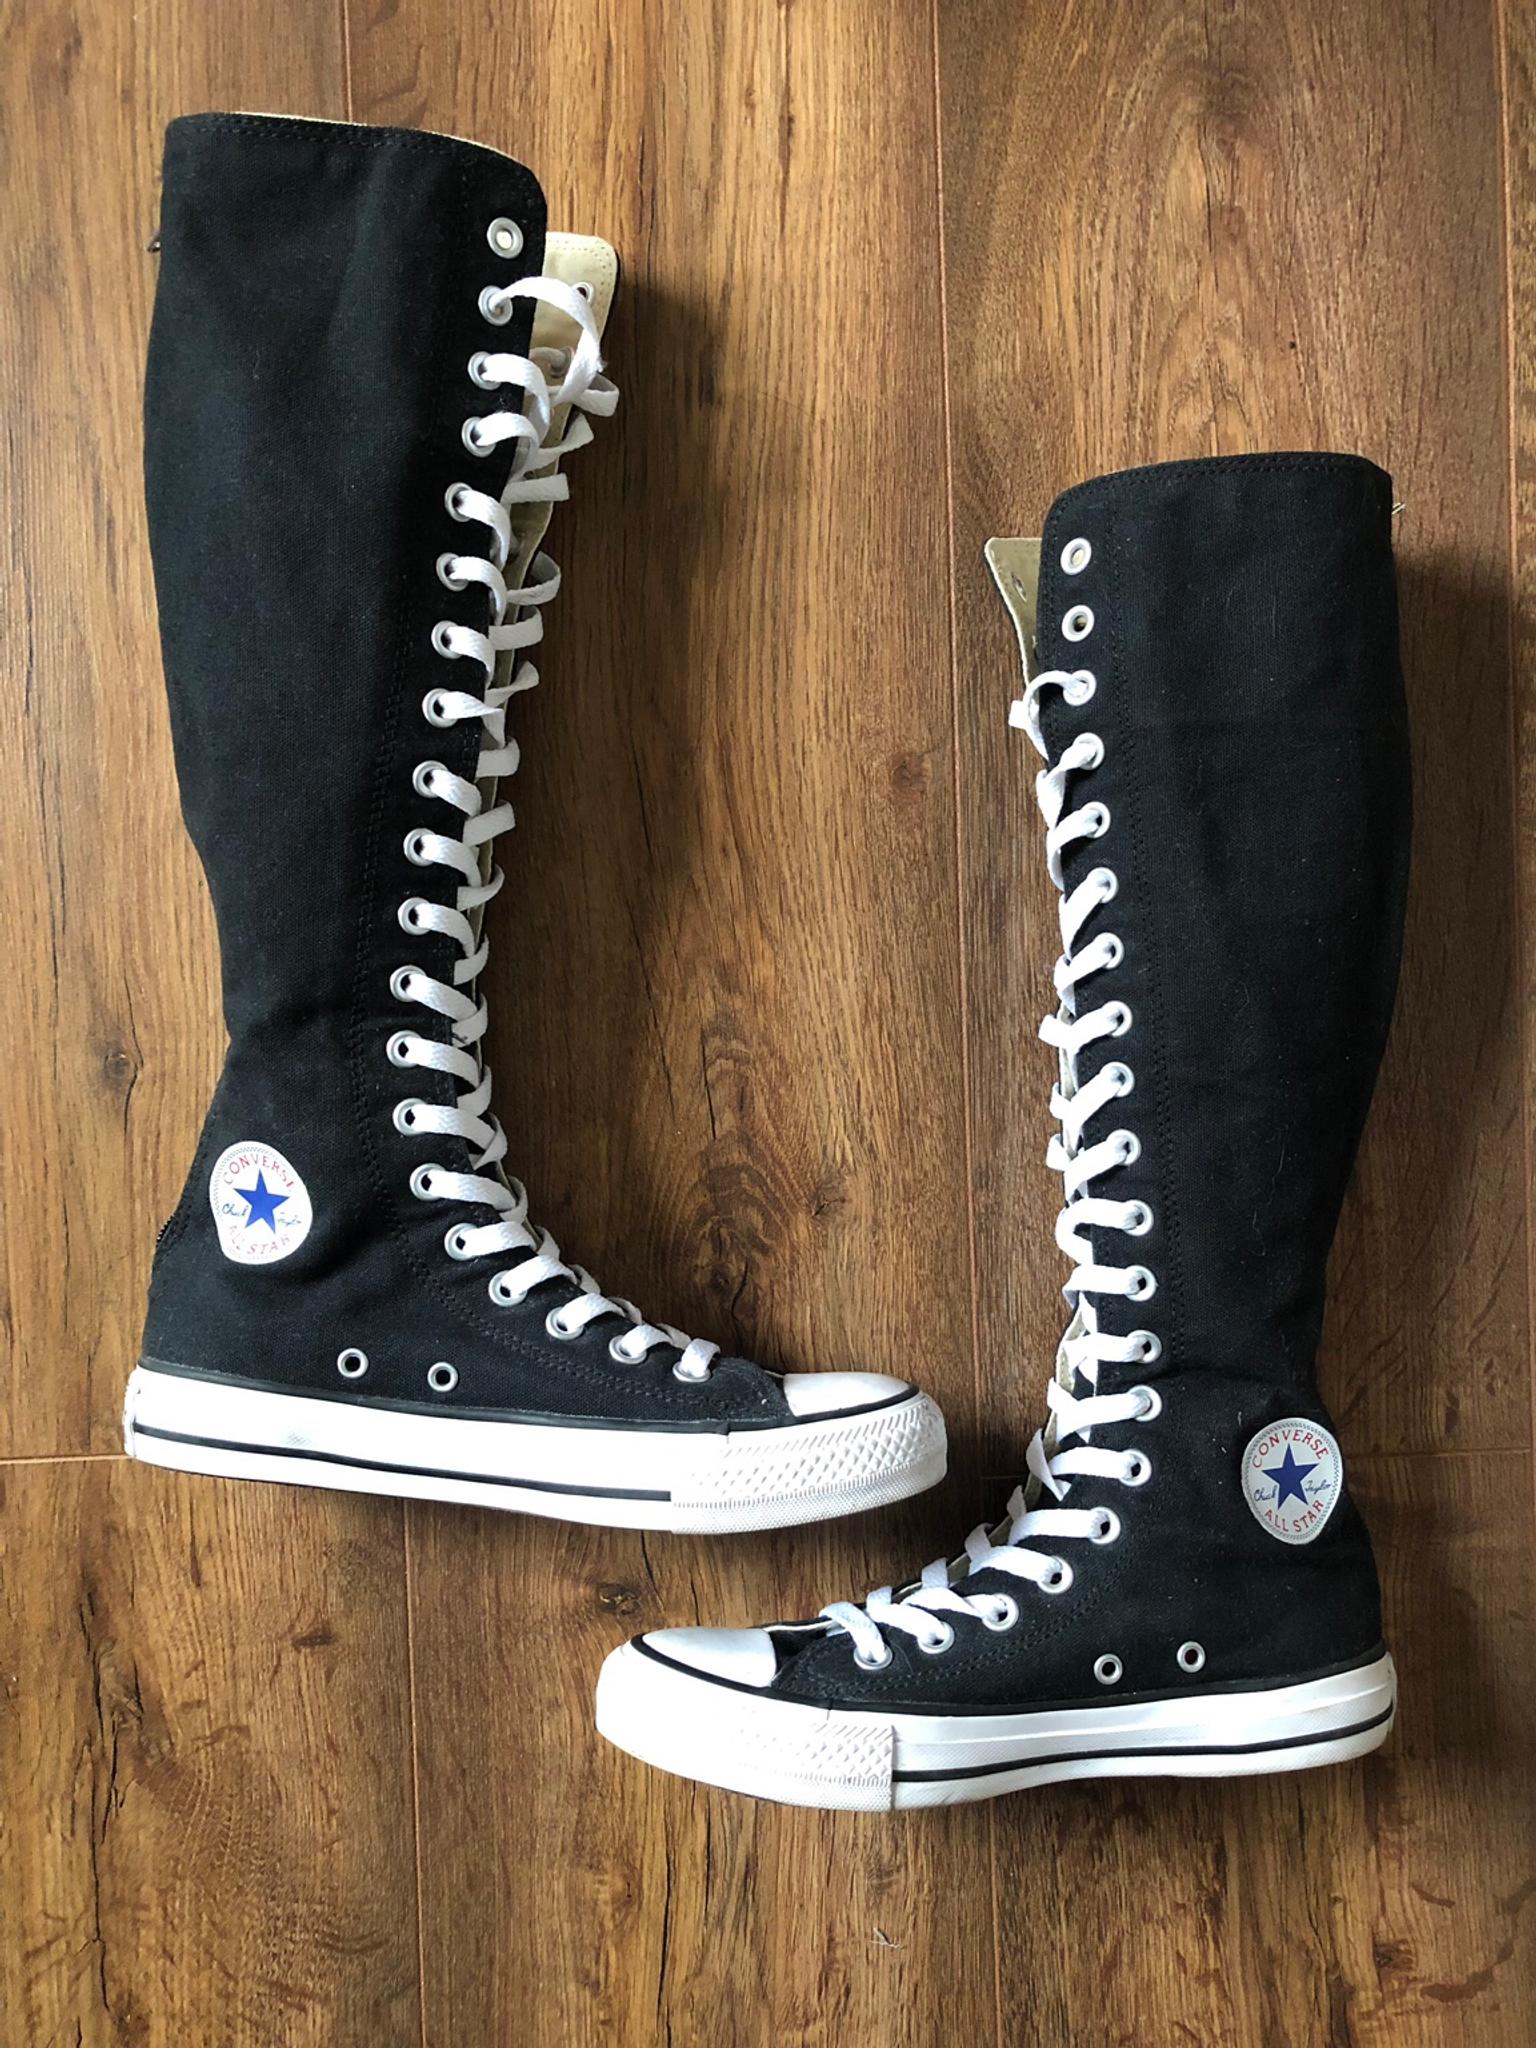 black converse boots size 4